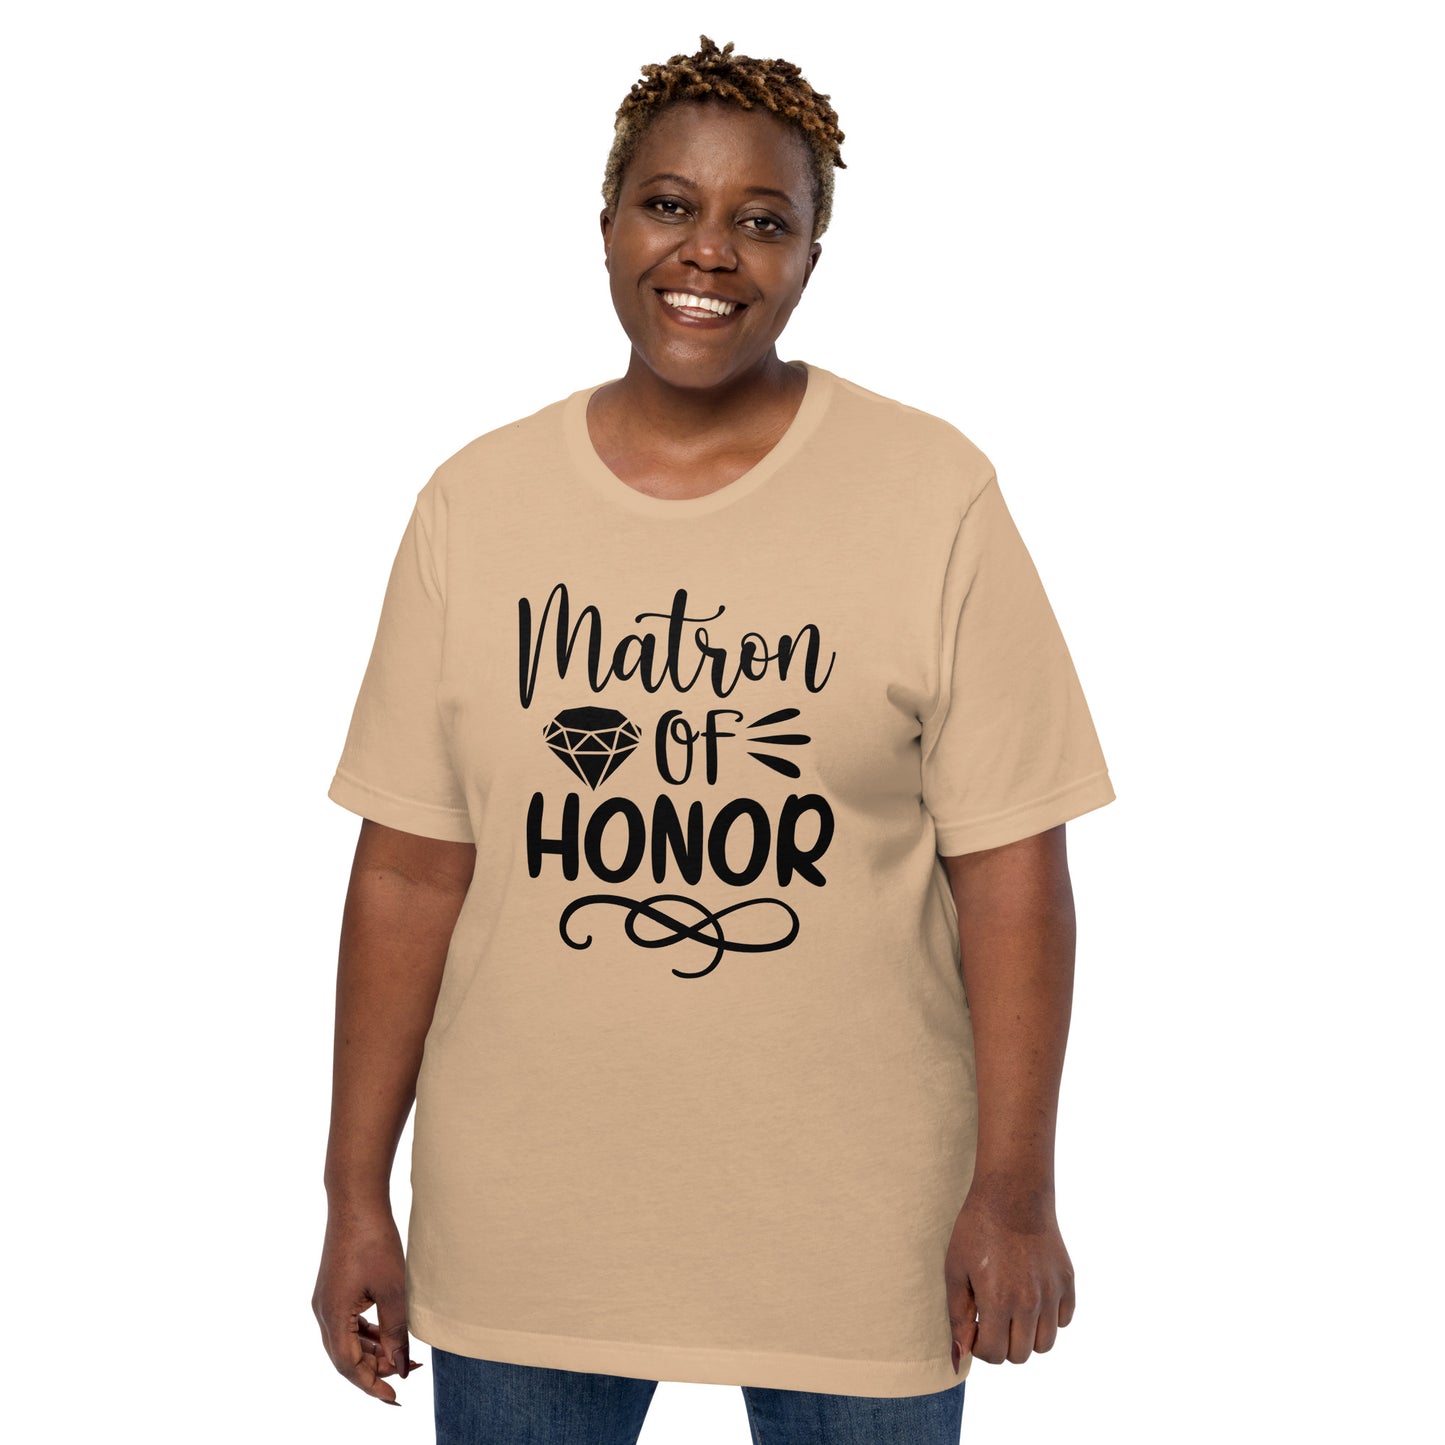 "Matron Of Honor" Customizable T-shirt